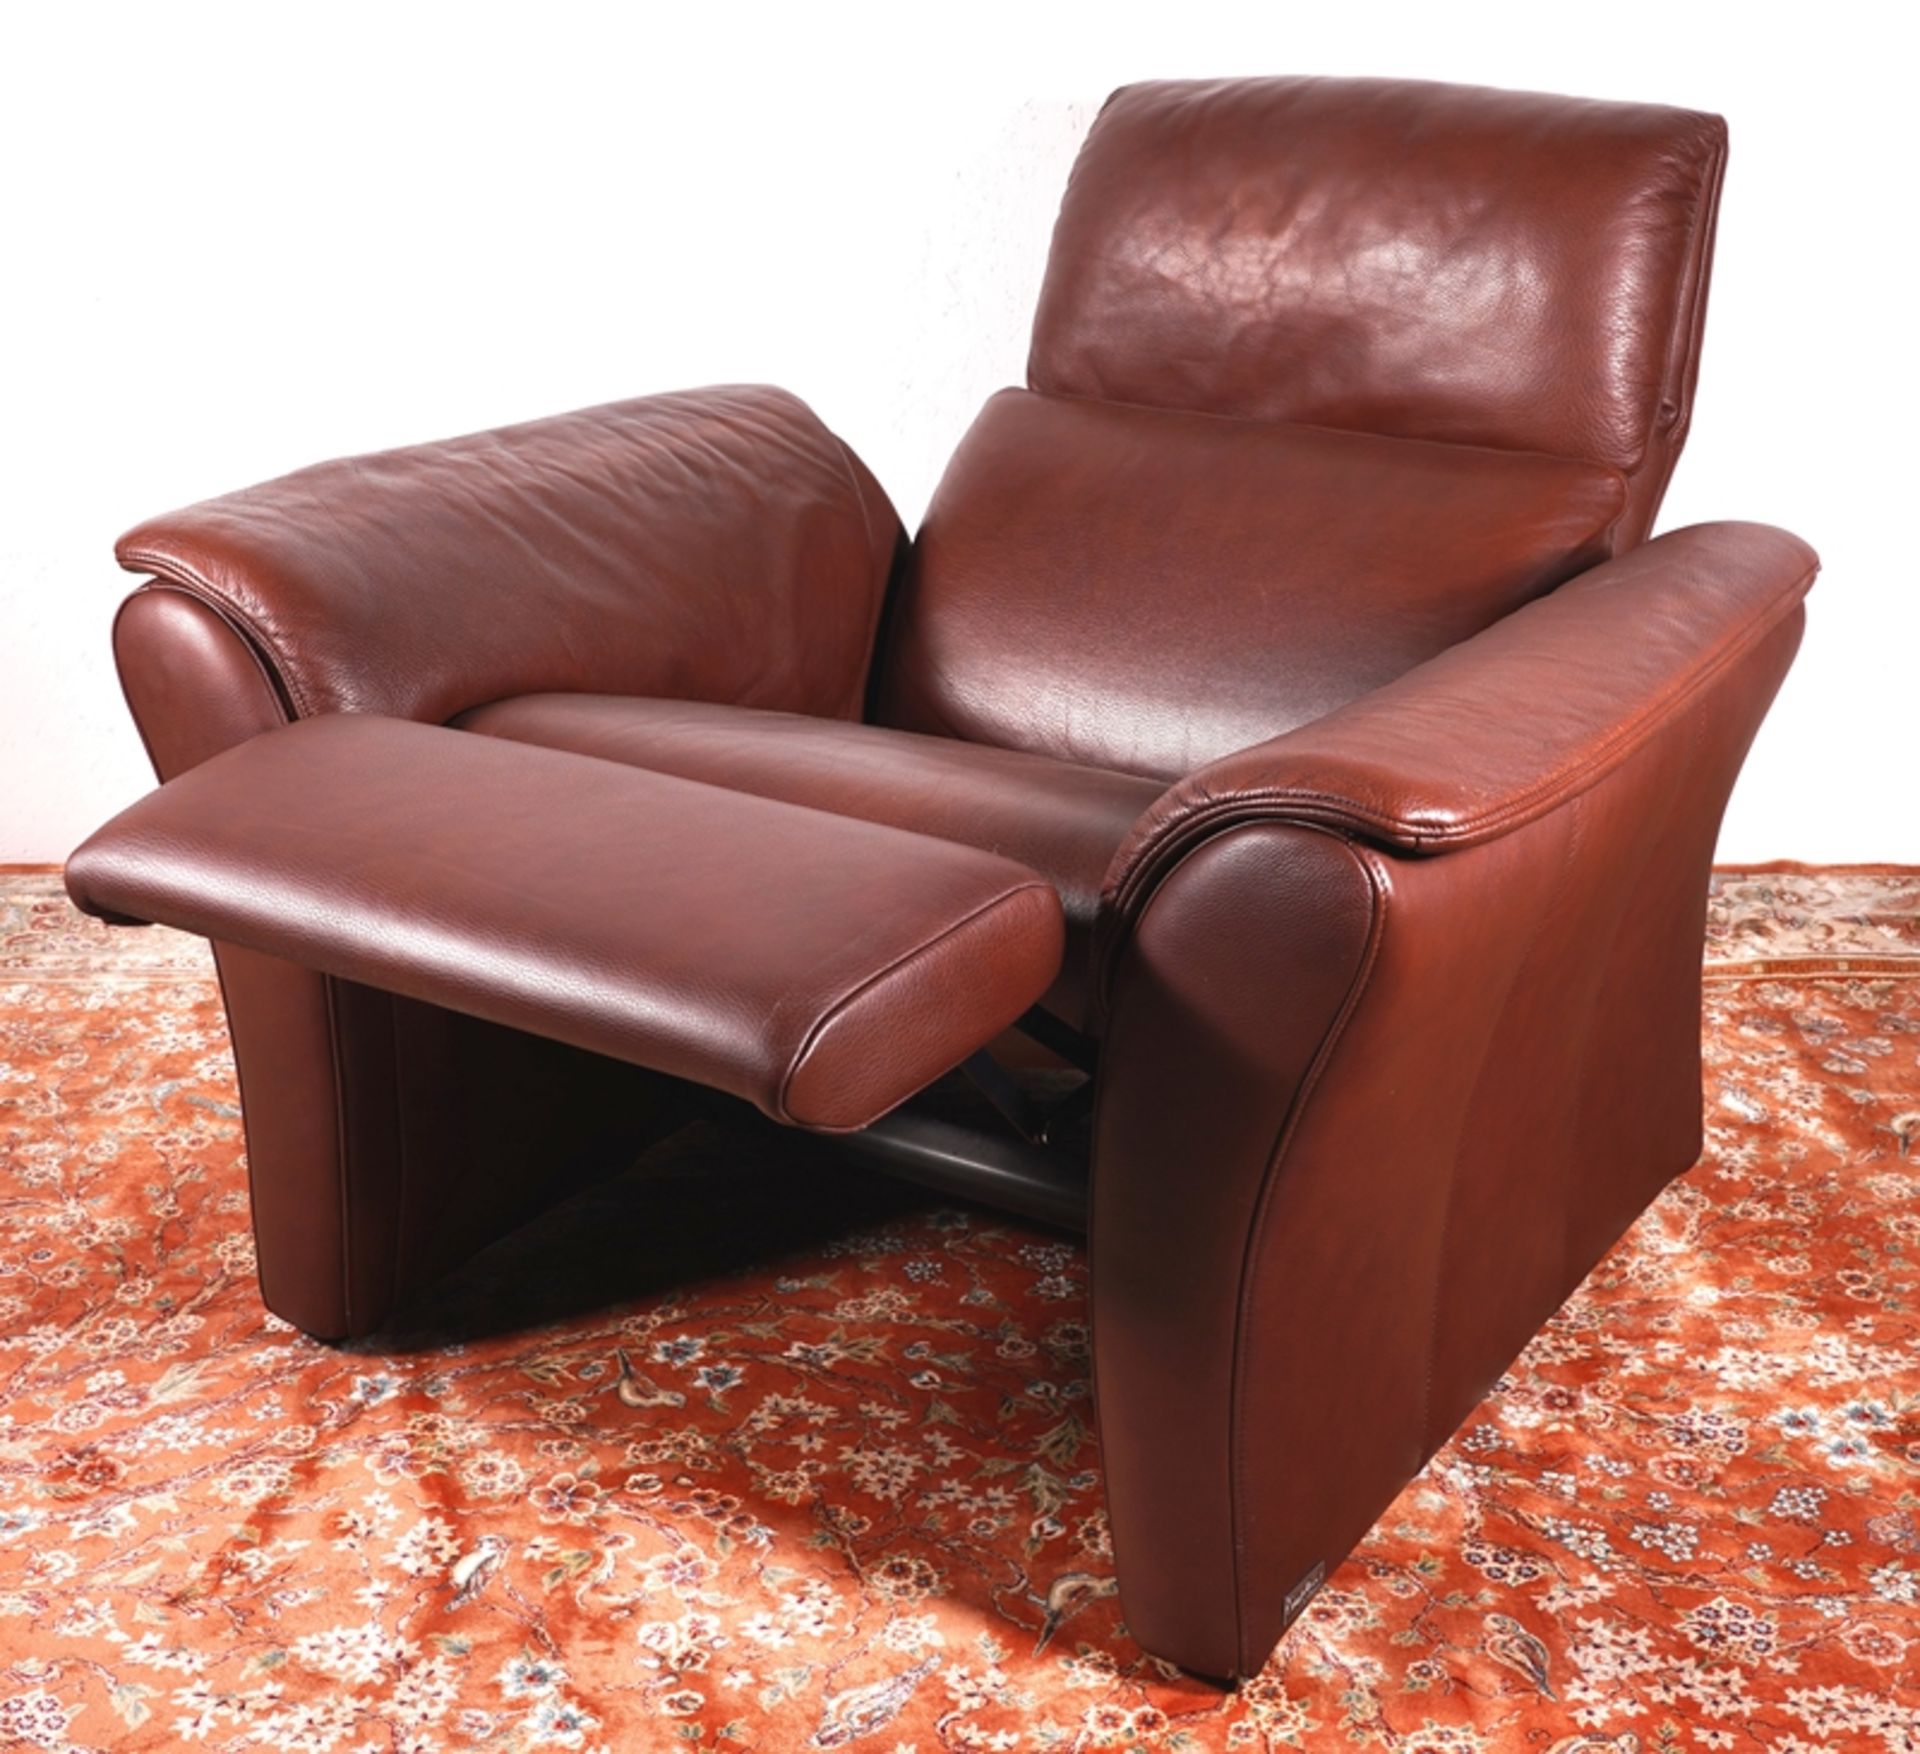 Schillig Relaxsessel | Schillig Relax armchair - Image 3 of 7